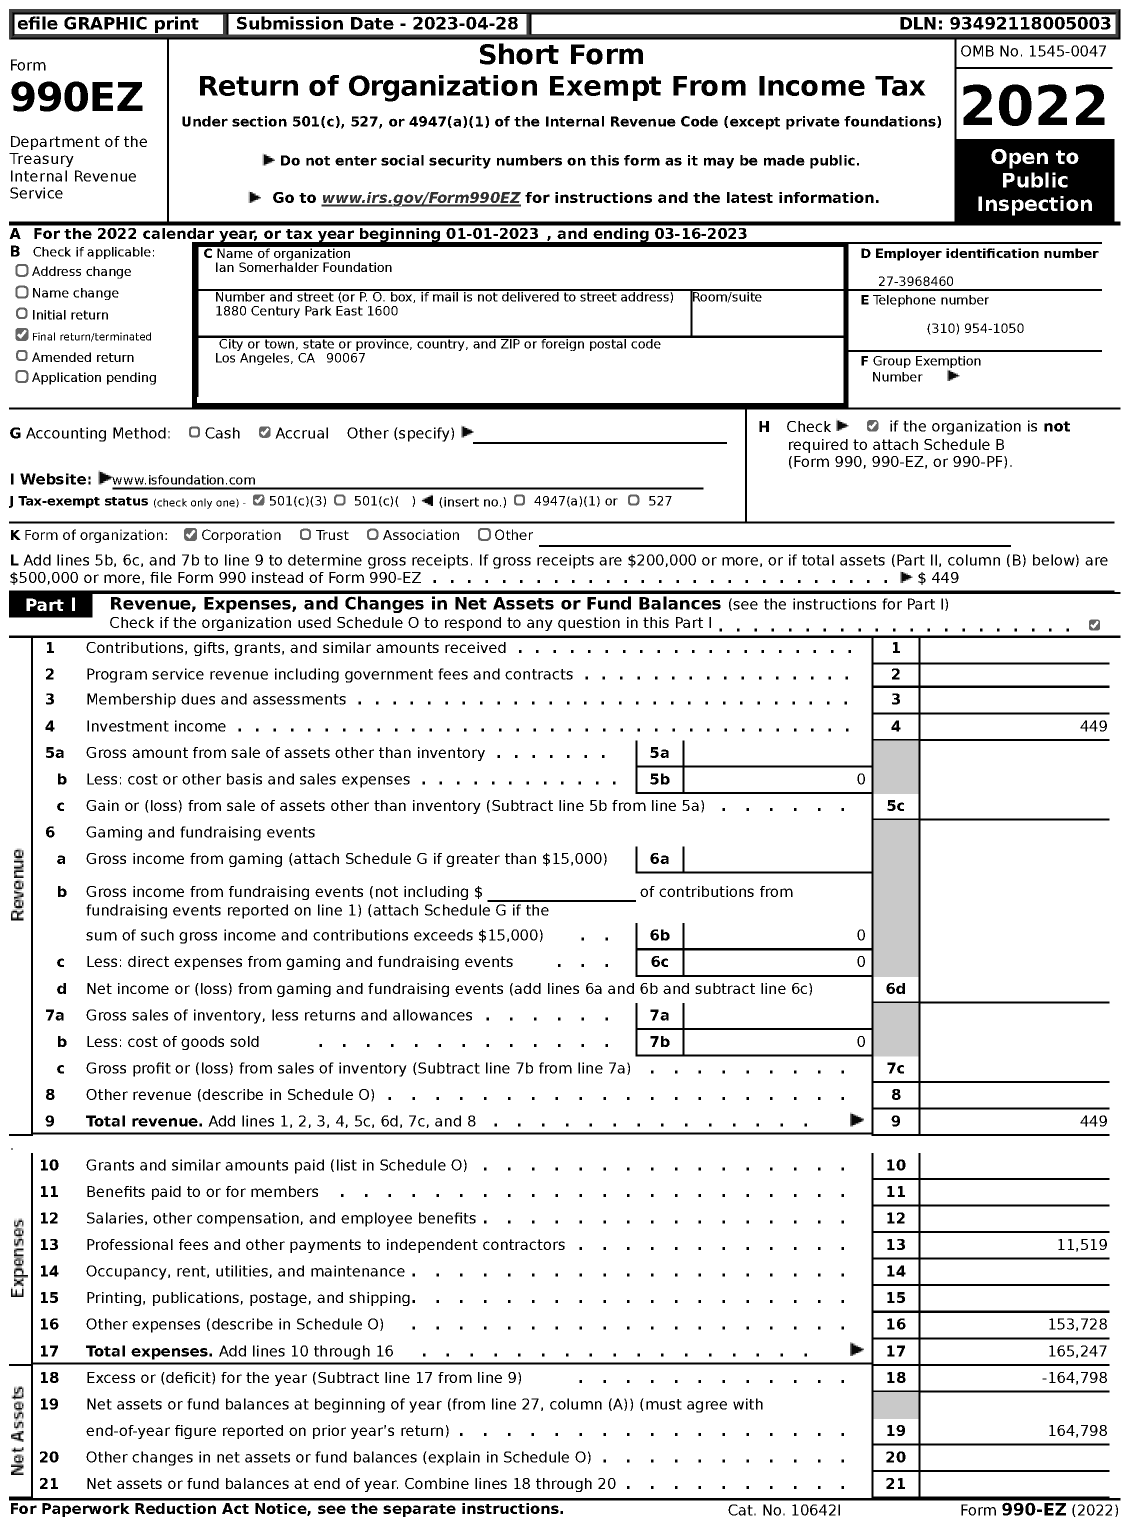 Image of first page of 2022 Form 990EZ for Ian Somerhalder Foundation